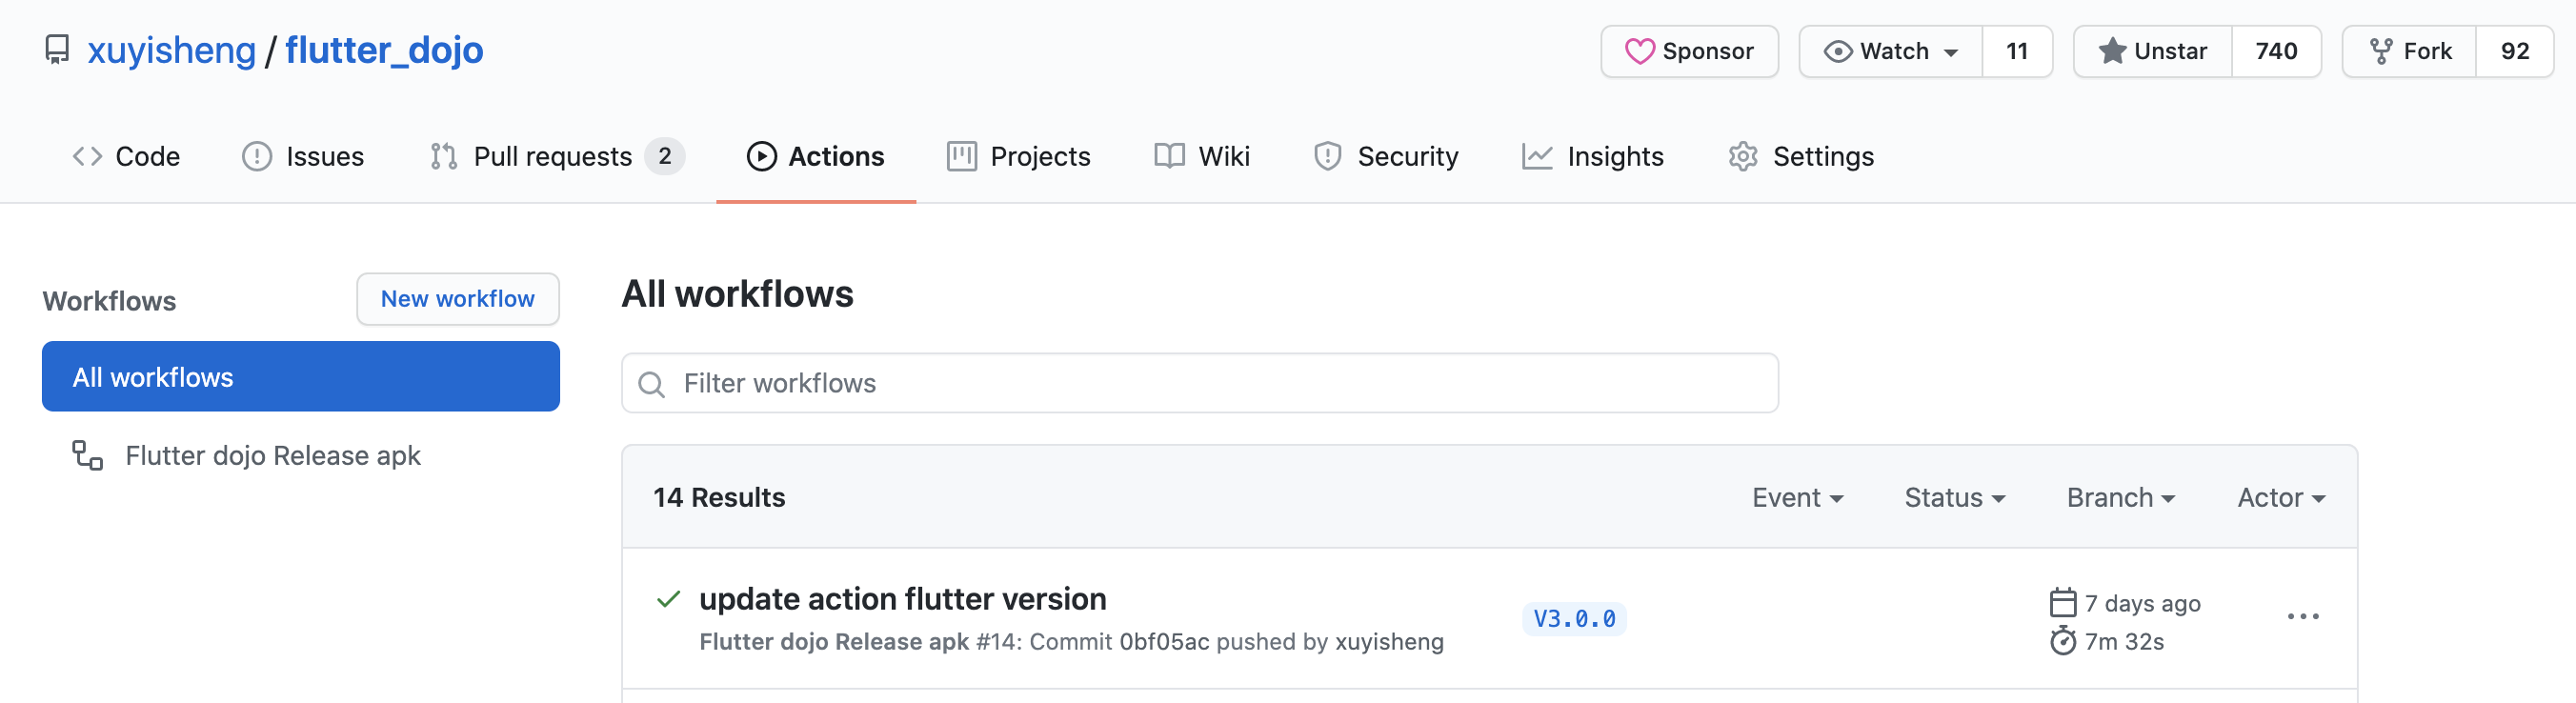 Flutter Dojo设计之道——利用Github打造完善的开源项目-开源基础软件社区